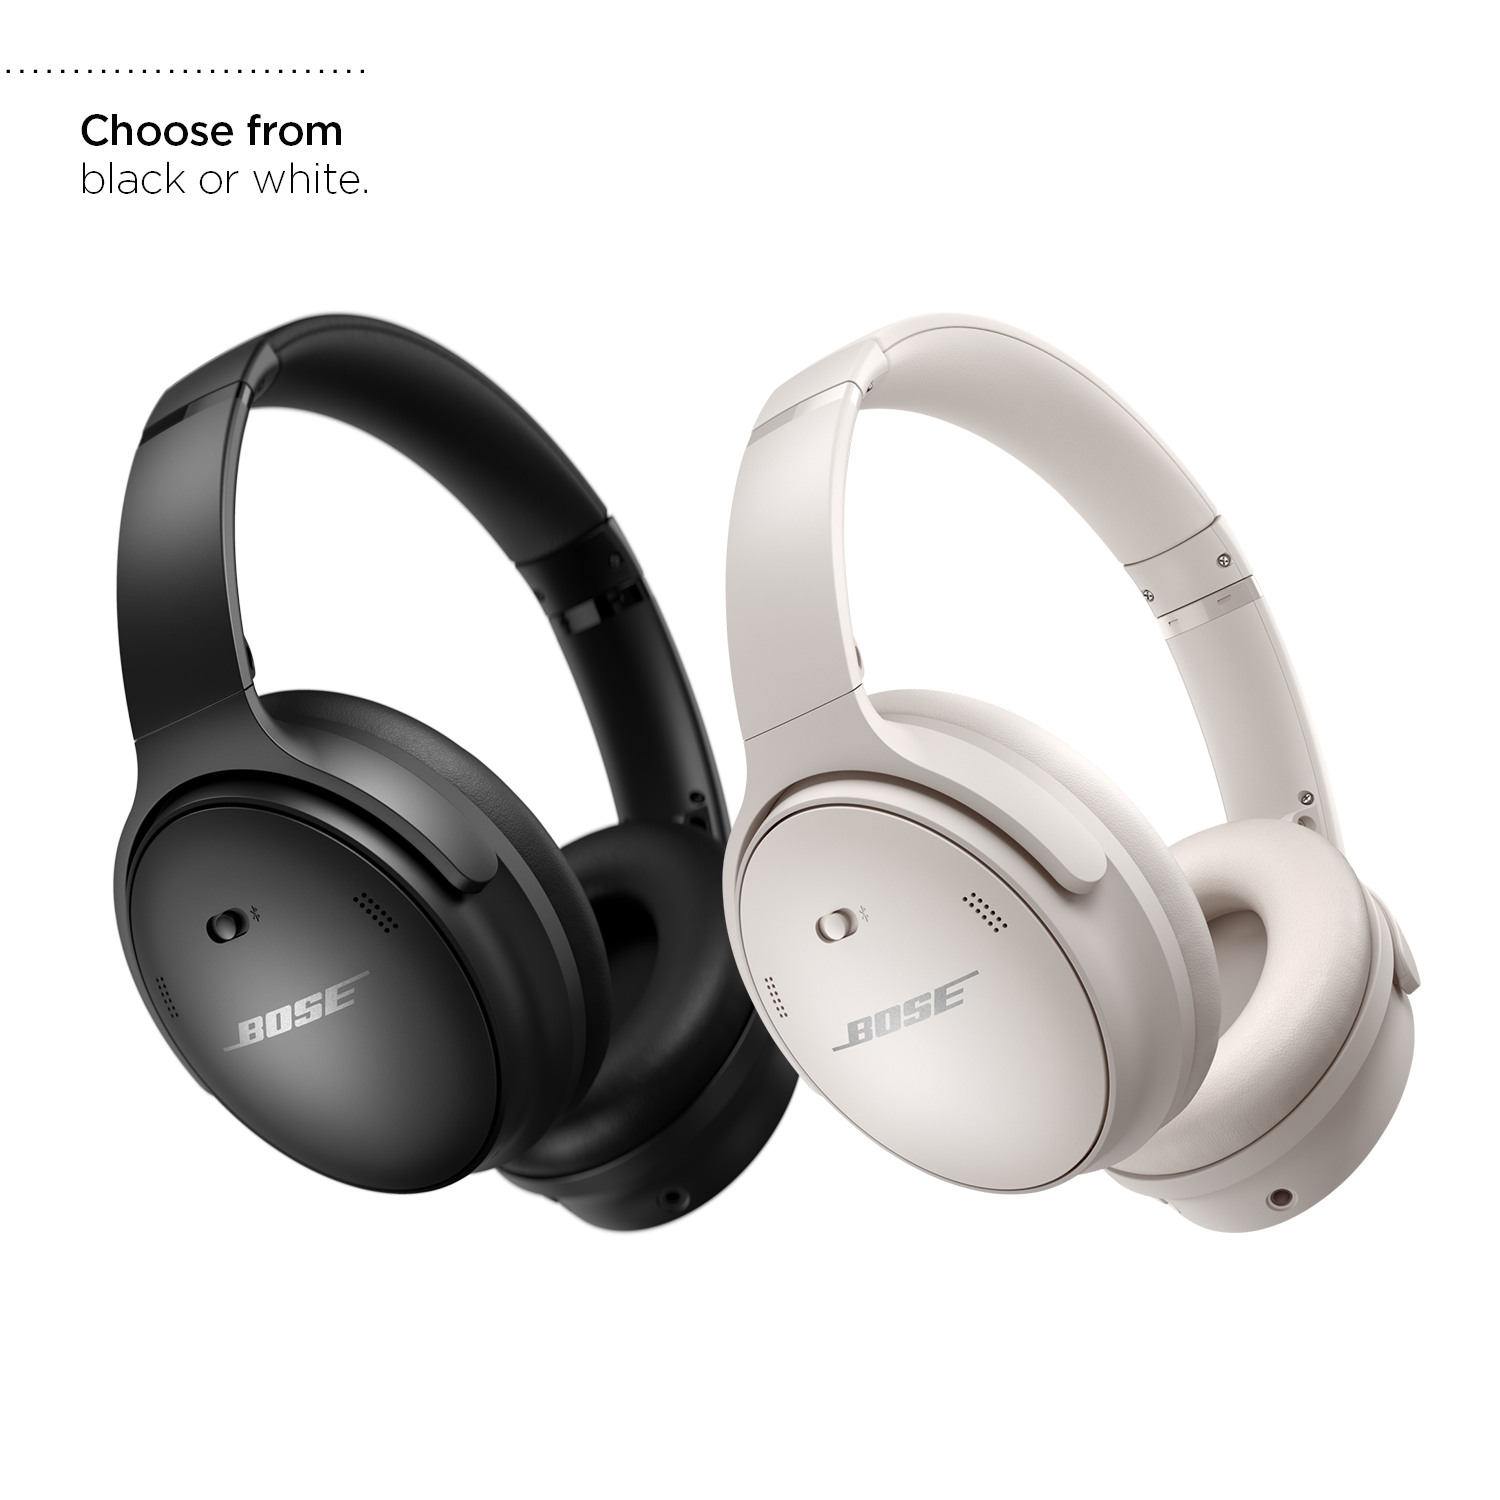 Bose QuietComfort 45 Headphones Noise Cancelling Over-Ear Wireless Bluetooth Earphones, Black - image 9 of 11